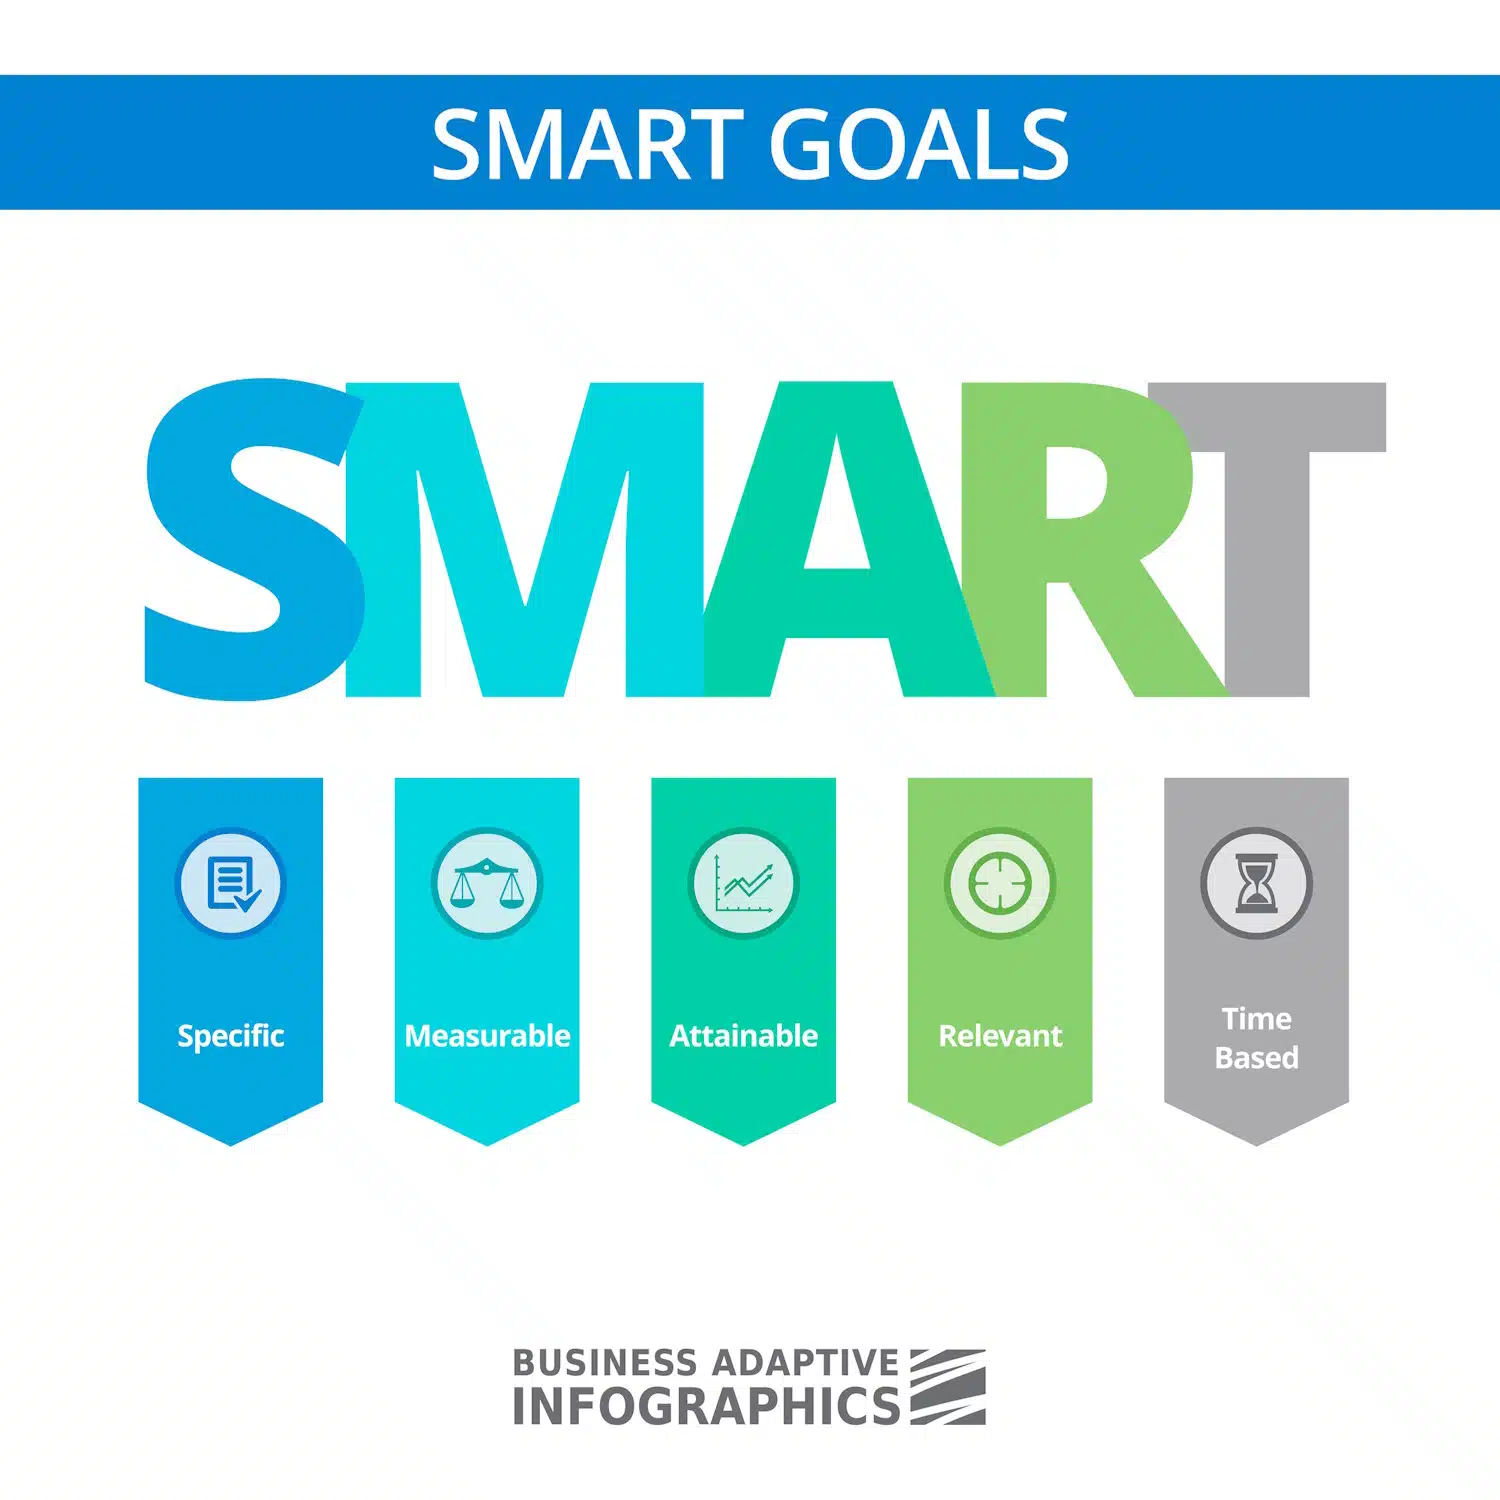 Business infographic explaining the SMART goals concept.